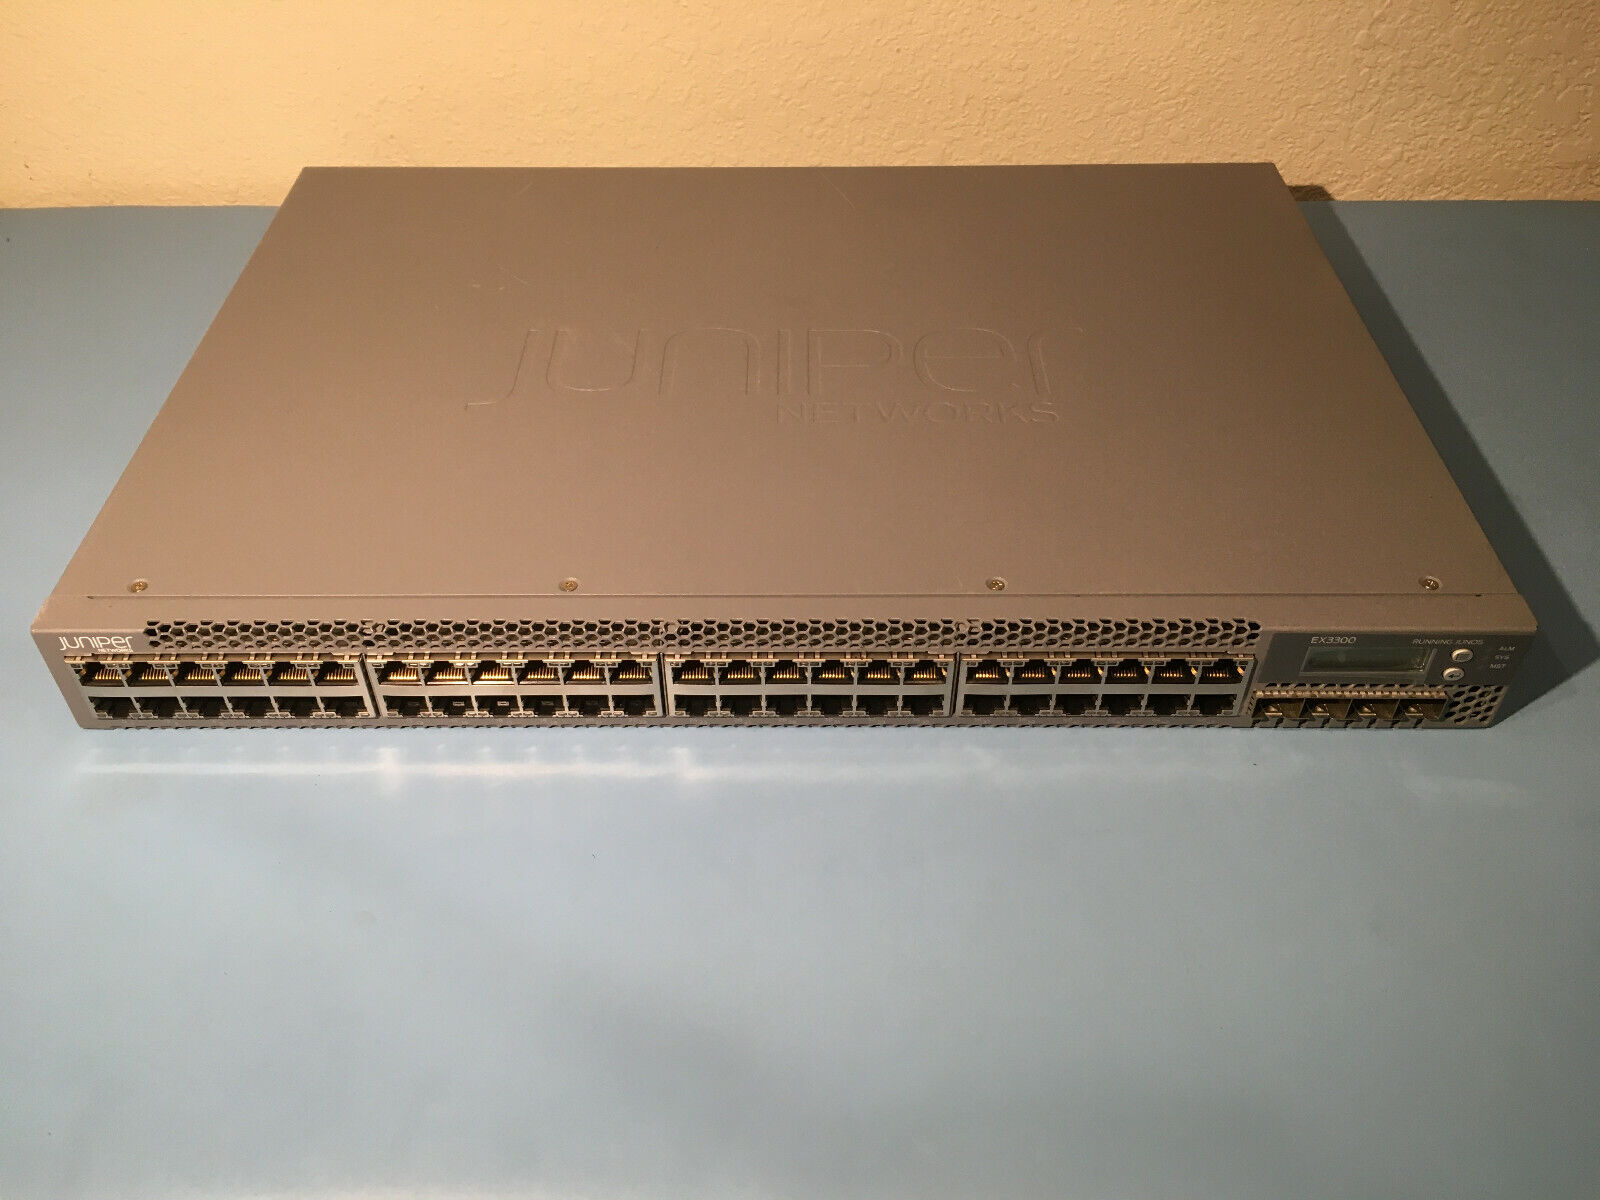 Juniper Networks EX3300-48T 48 Port Gigabit 4x 10 GbE SPF+ Ports Switch - Tested